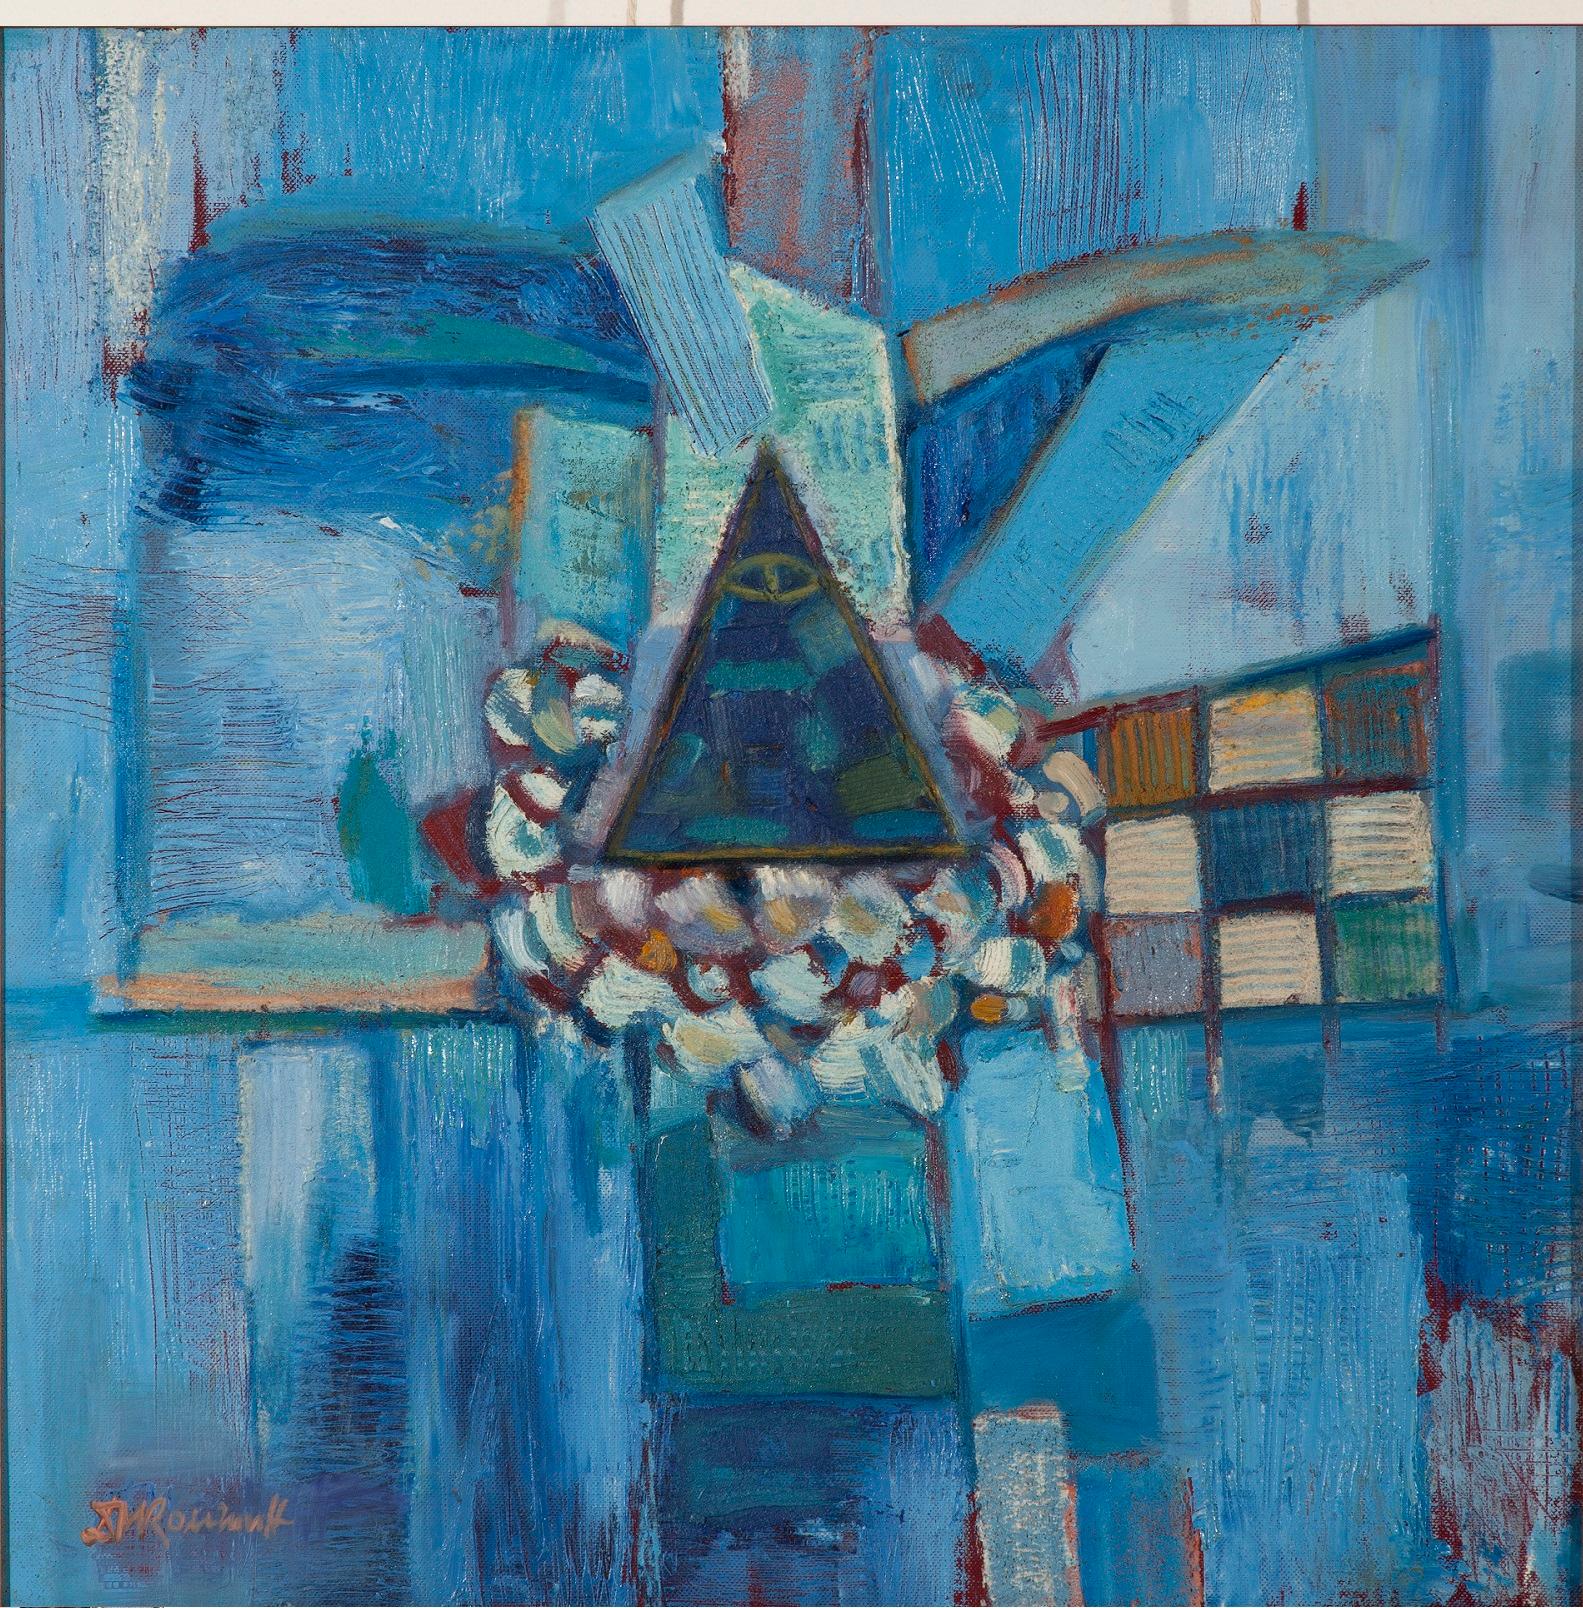 Dimitar Mitov - Komshin  Abstract Painting - Blue Expression II - Abstract Oil Painting Blue Green Brown White Beige